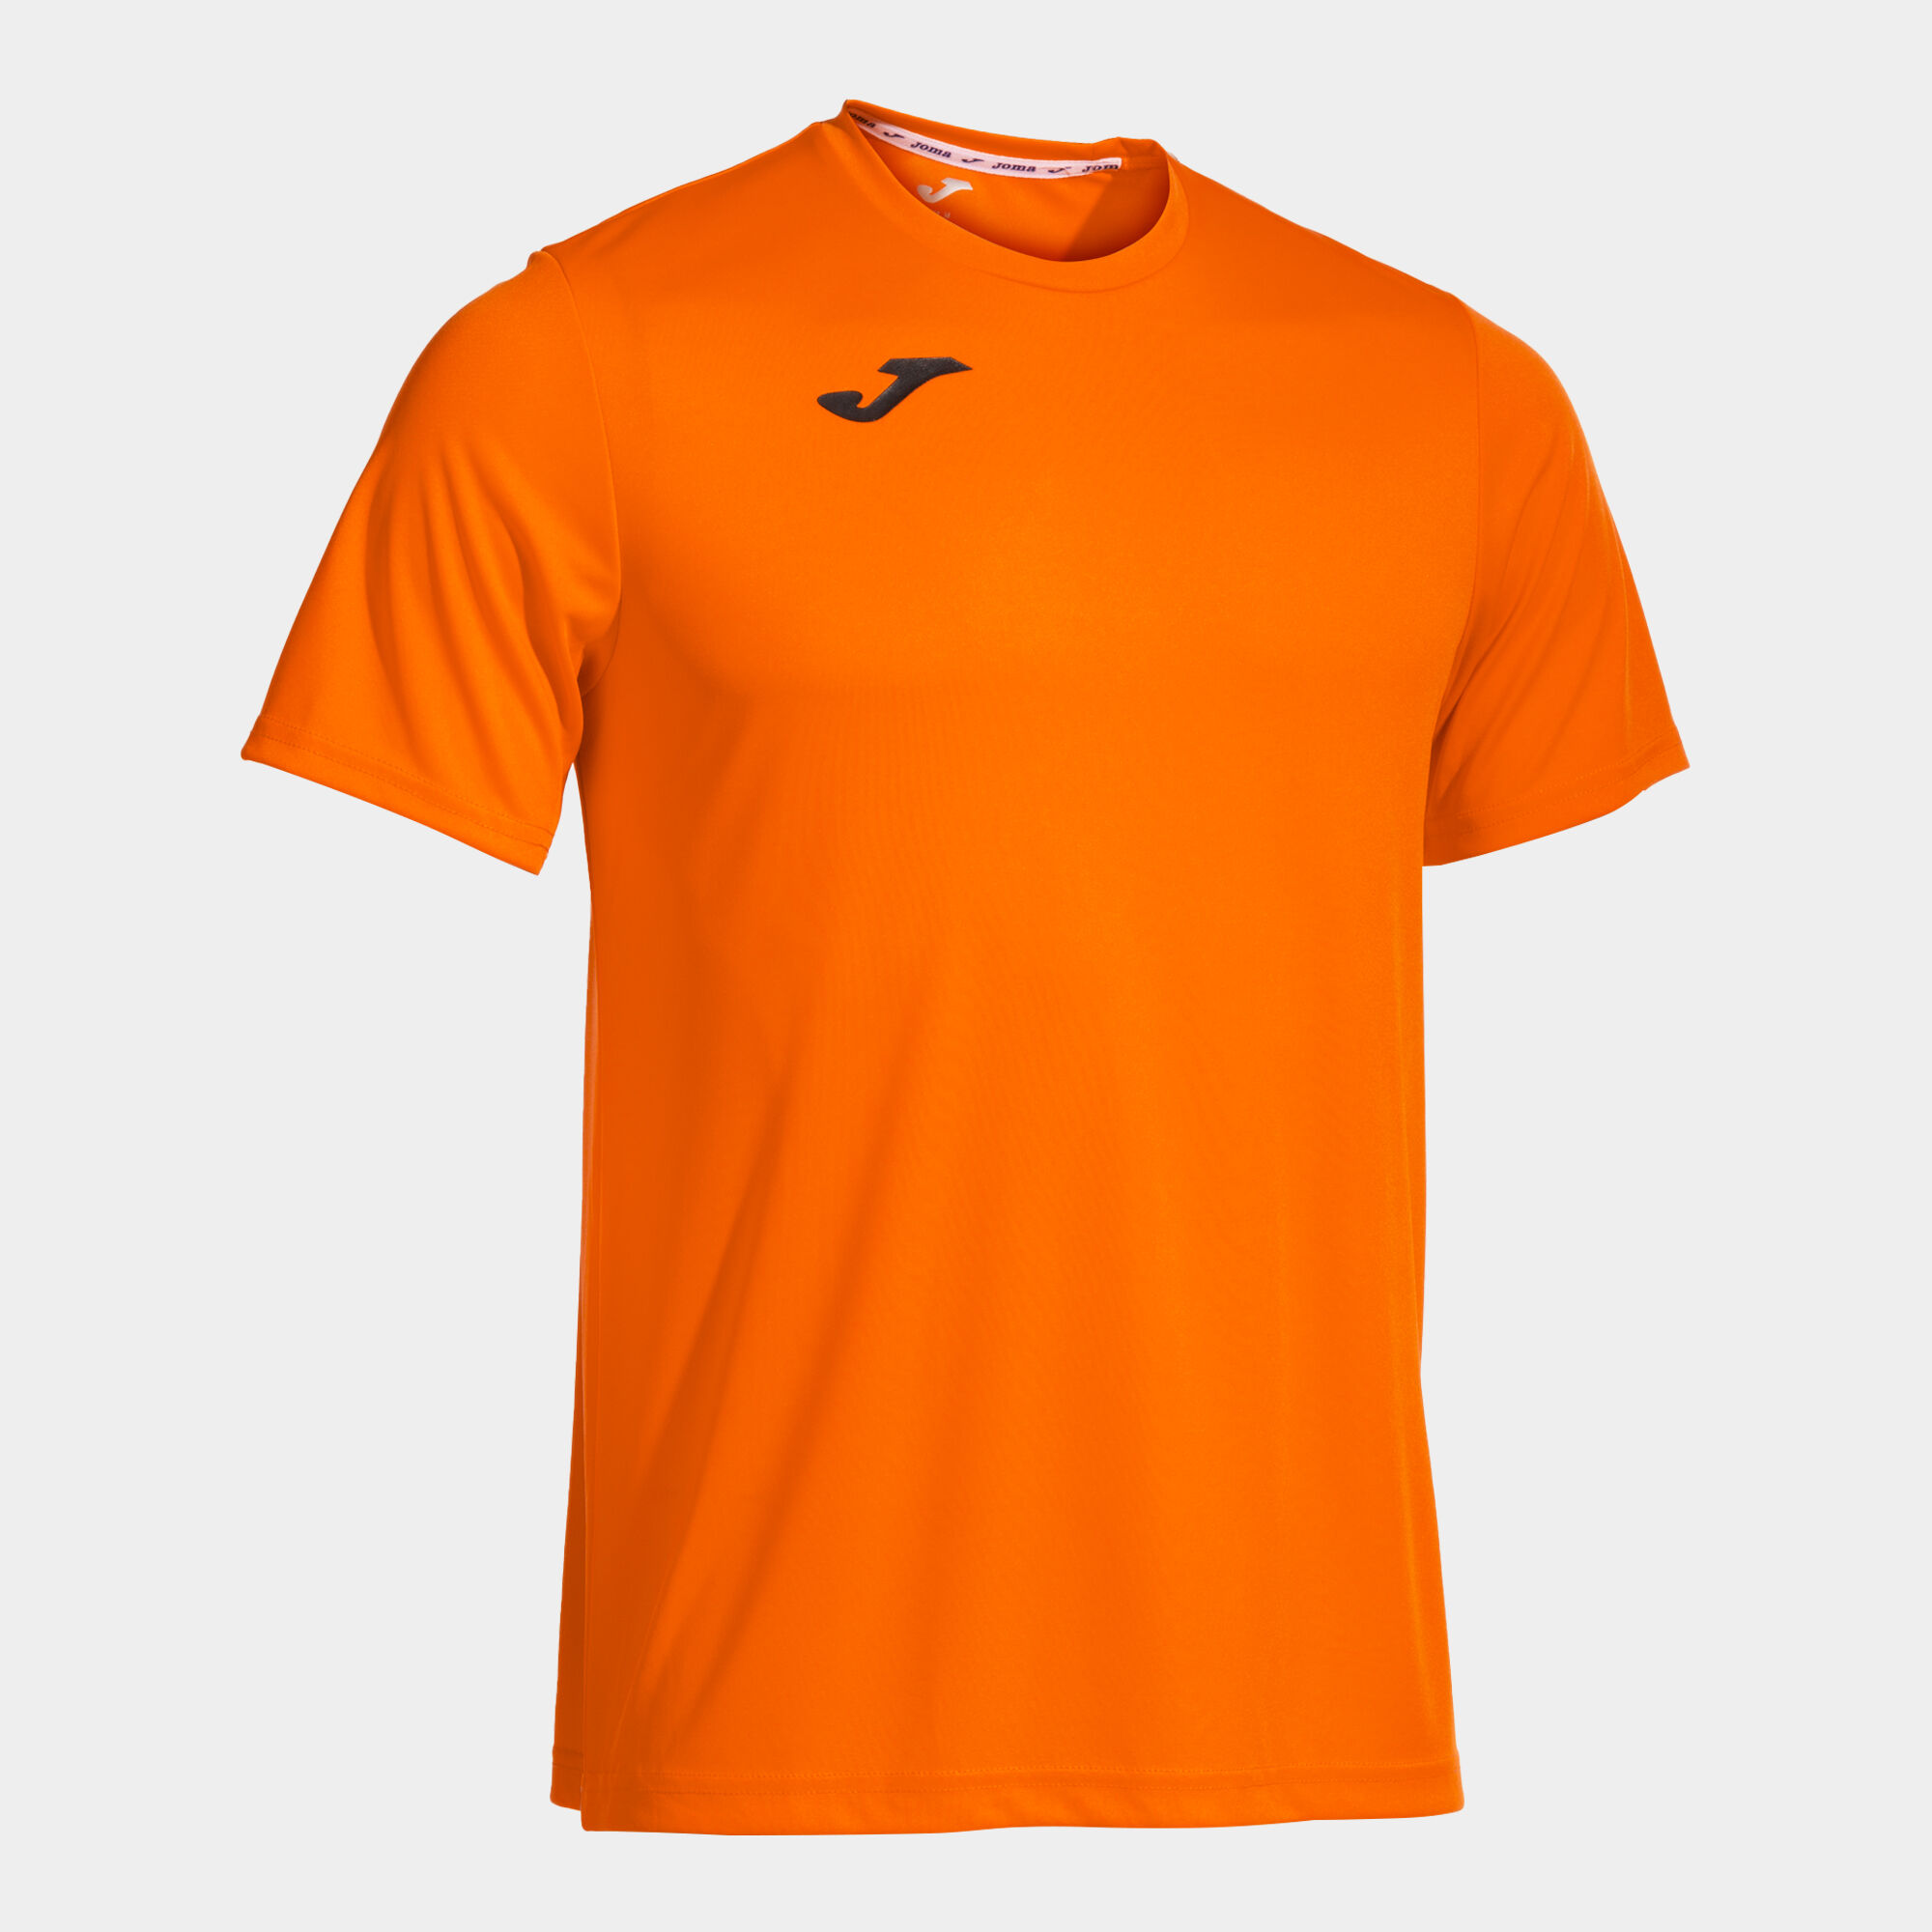 Camiseta manga corta hombre Combi naranja